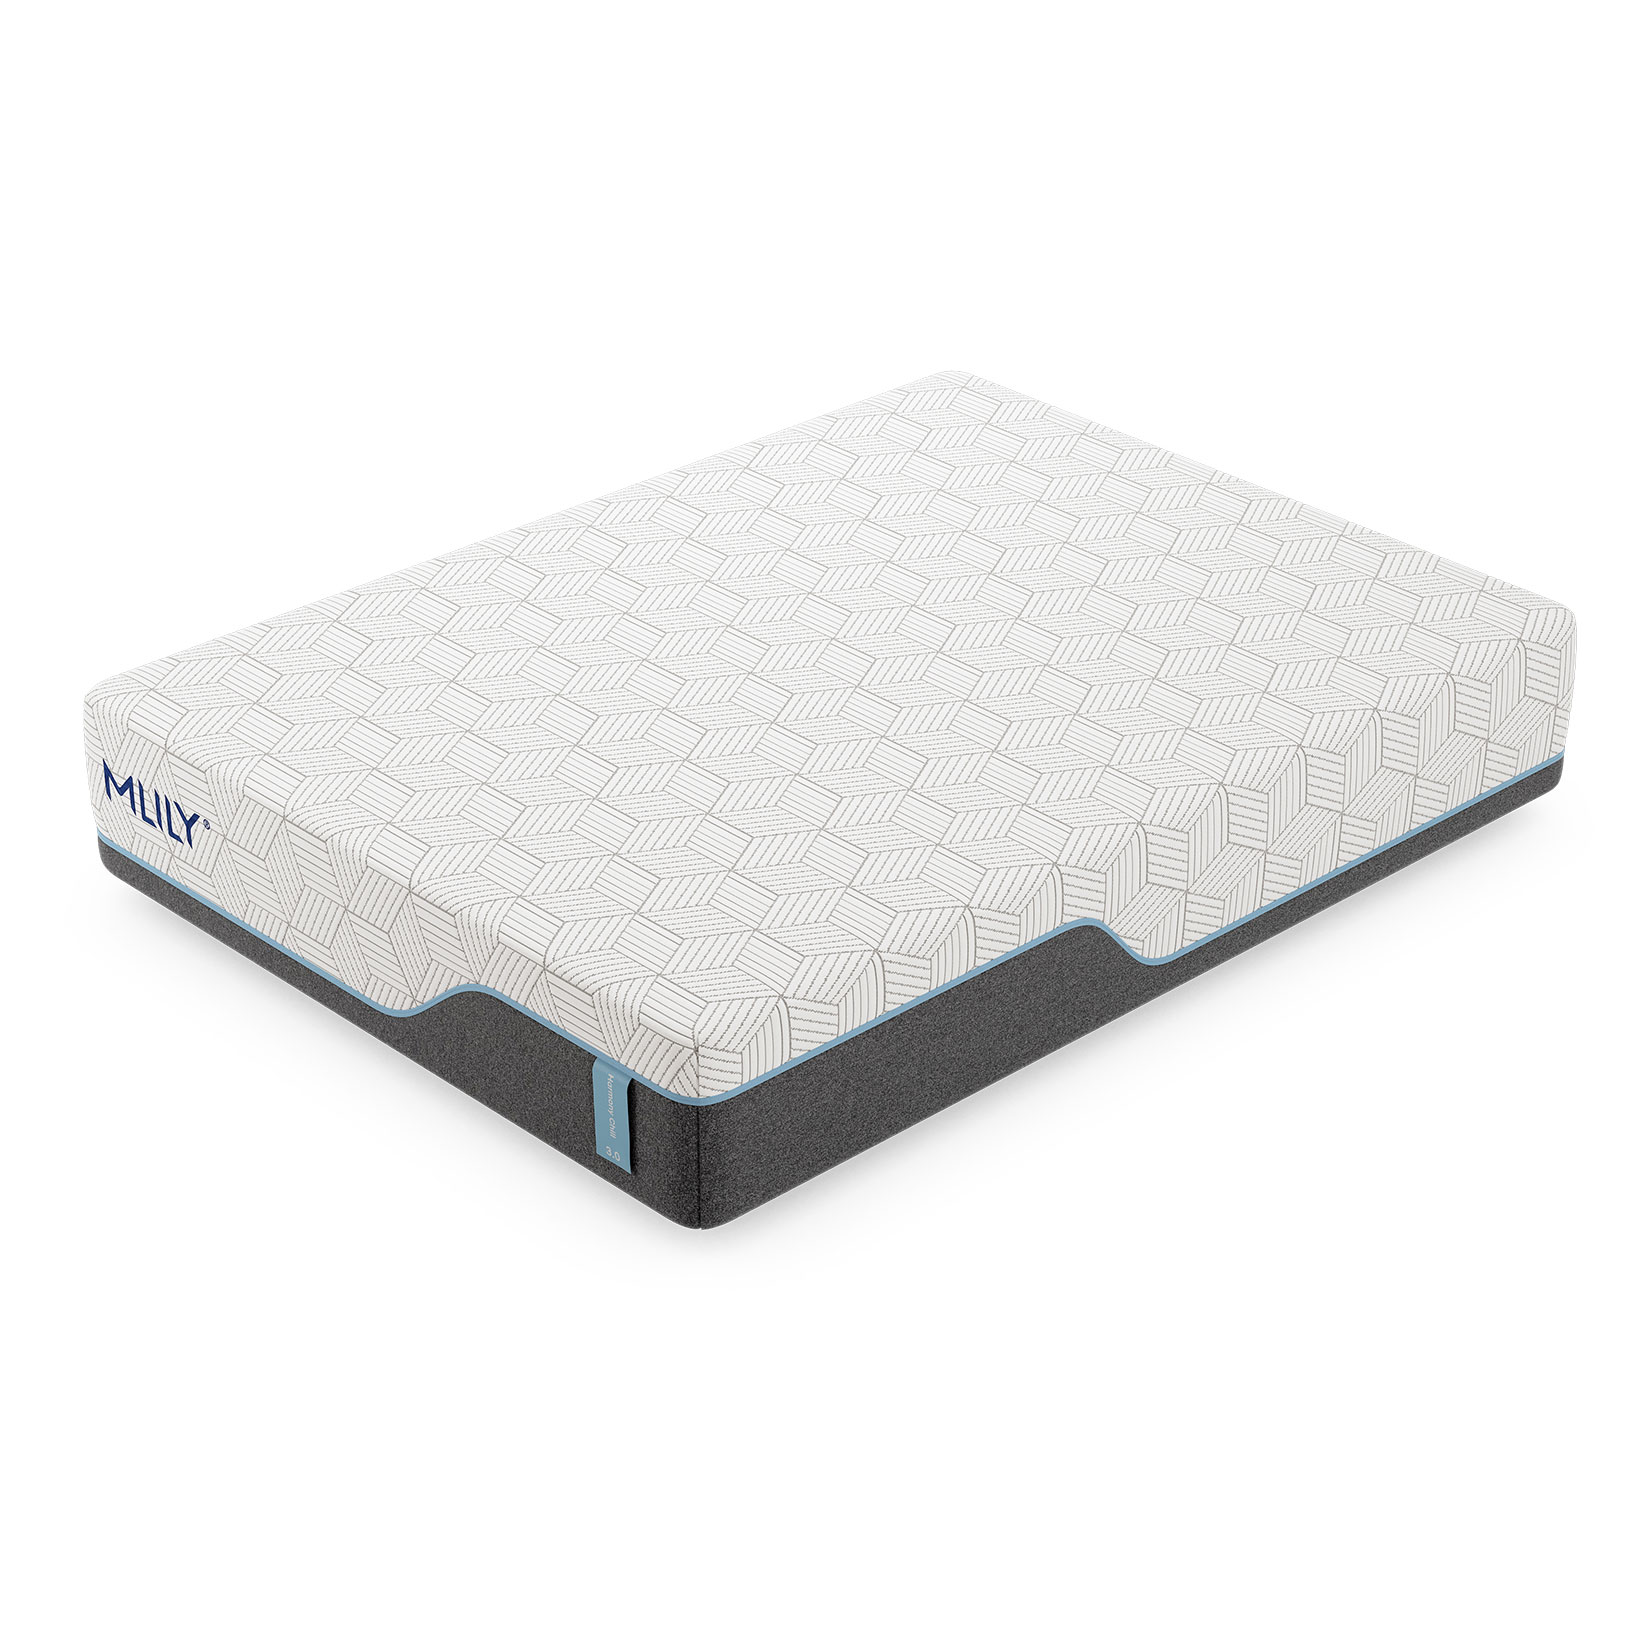 Cooling_Cover_Memory_Foam_mattress_3.0